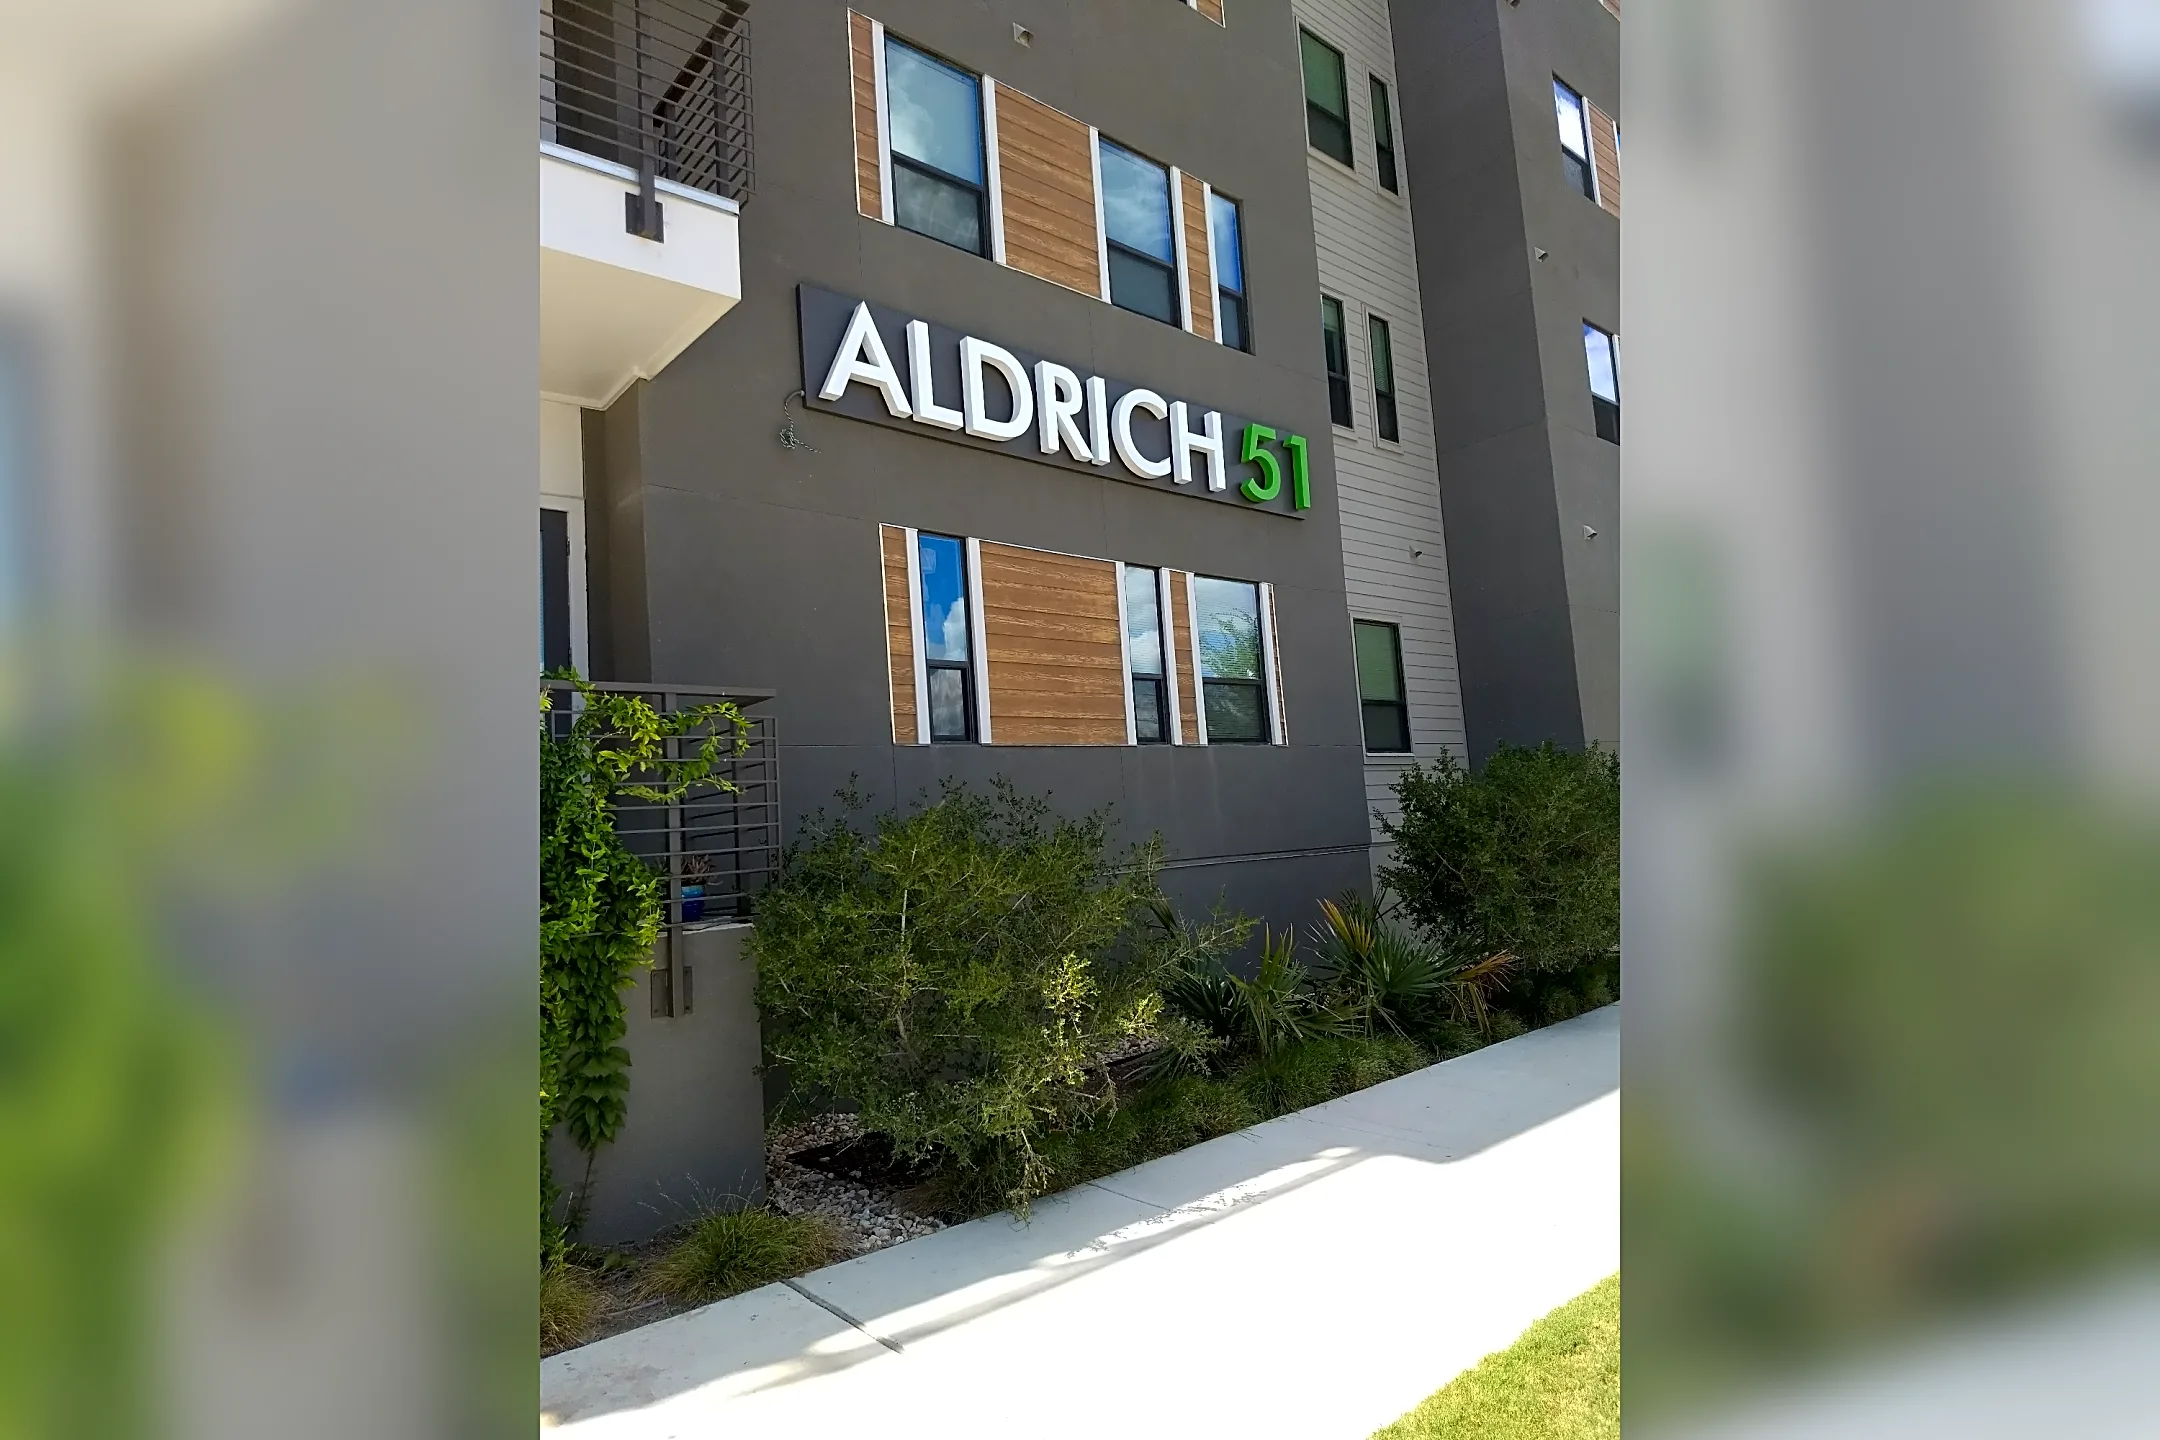 Pool - Aldrich 51. Apartments Homes - Austin, TX